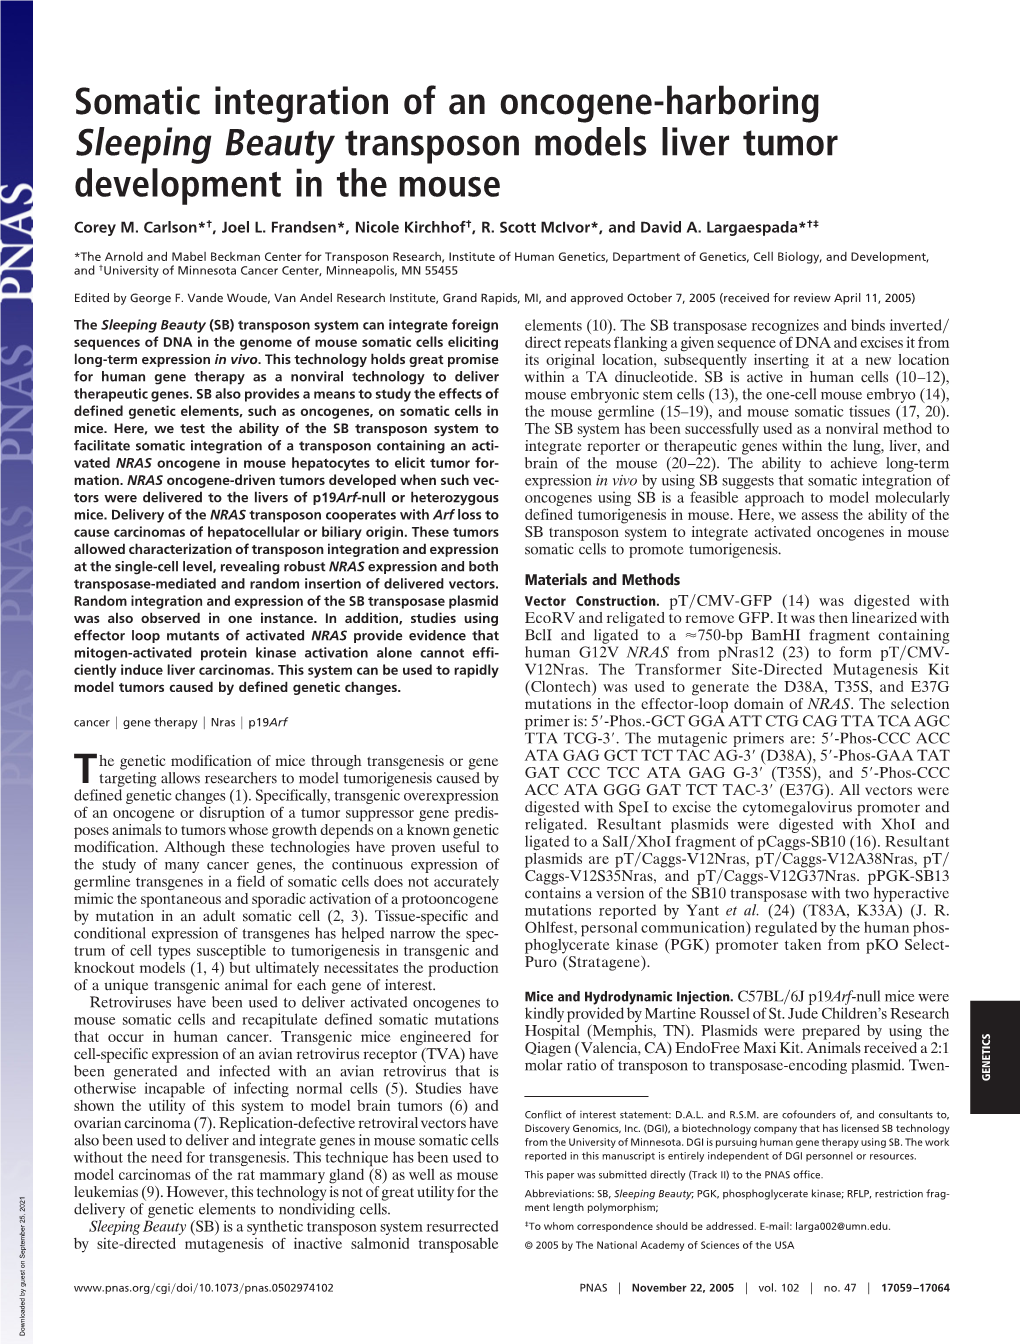 Somatic Integration of an Oncogene-Harboring Sleeping Beauty Transposon Models Liver Tumor Development in the Mouse